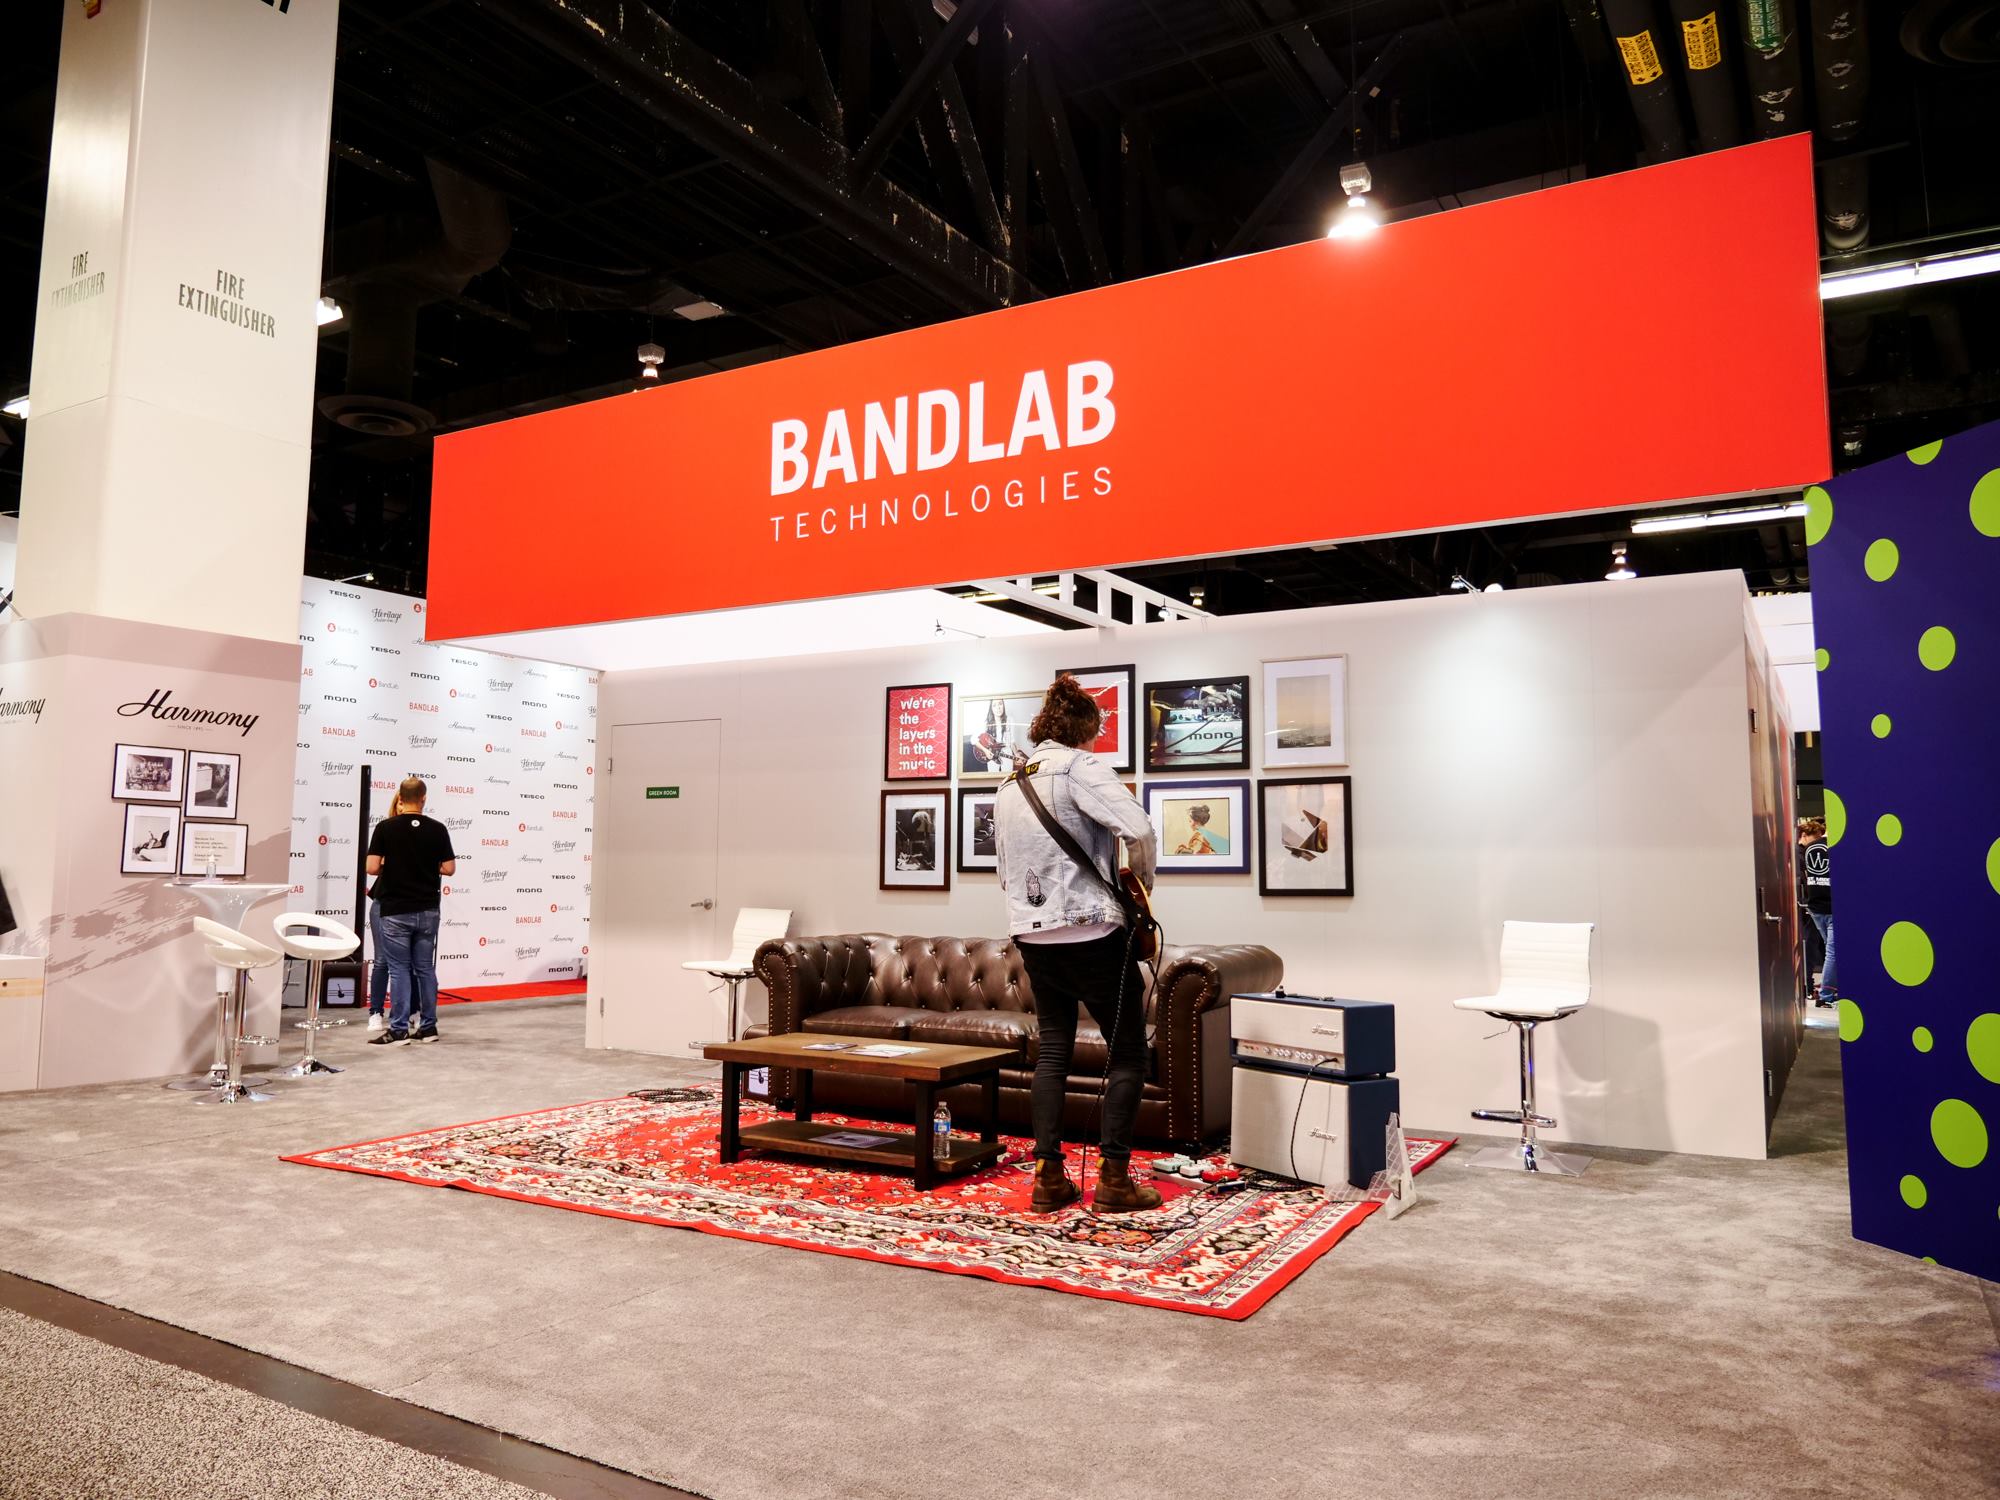 About BandLab Technologies